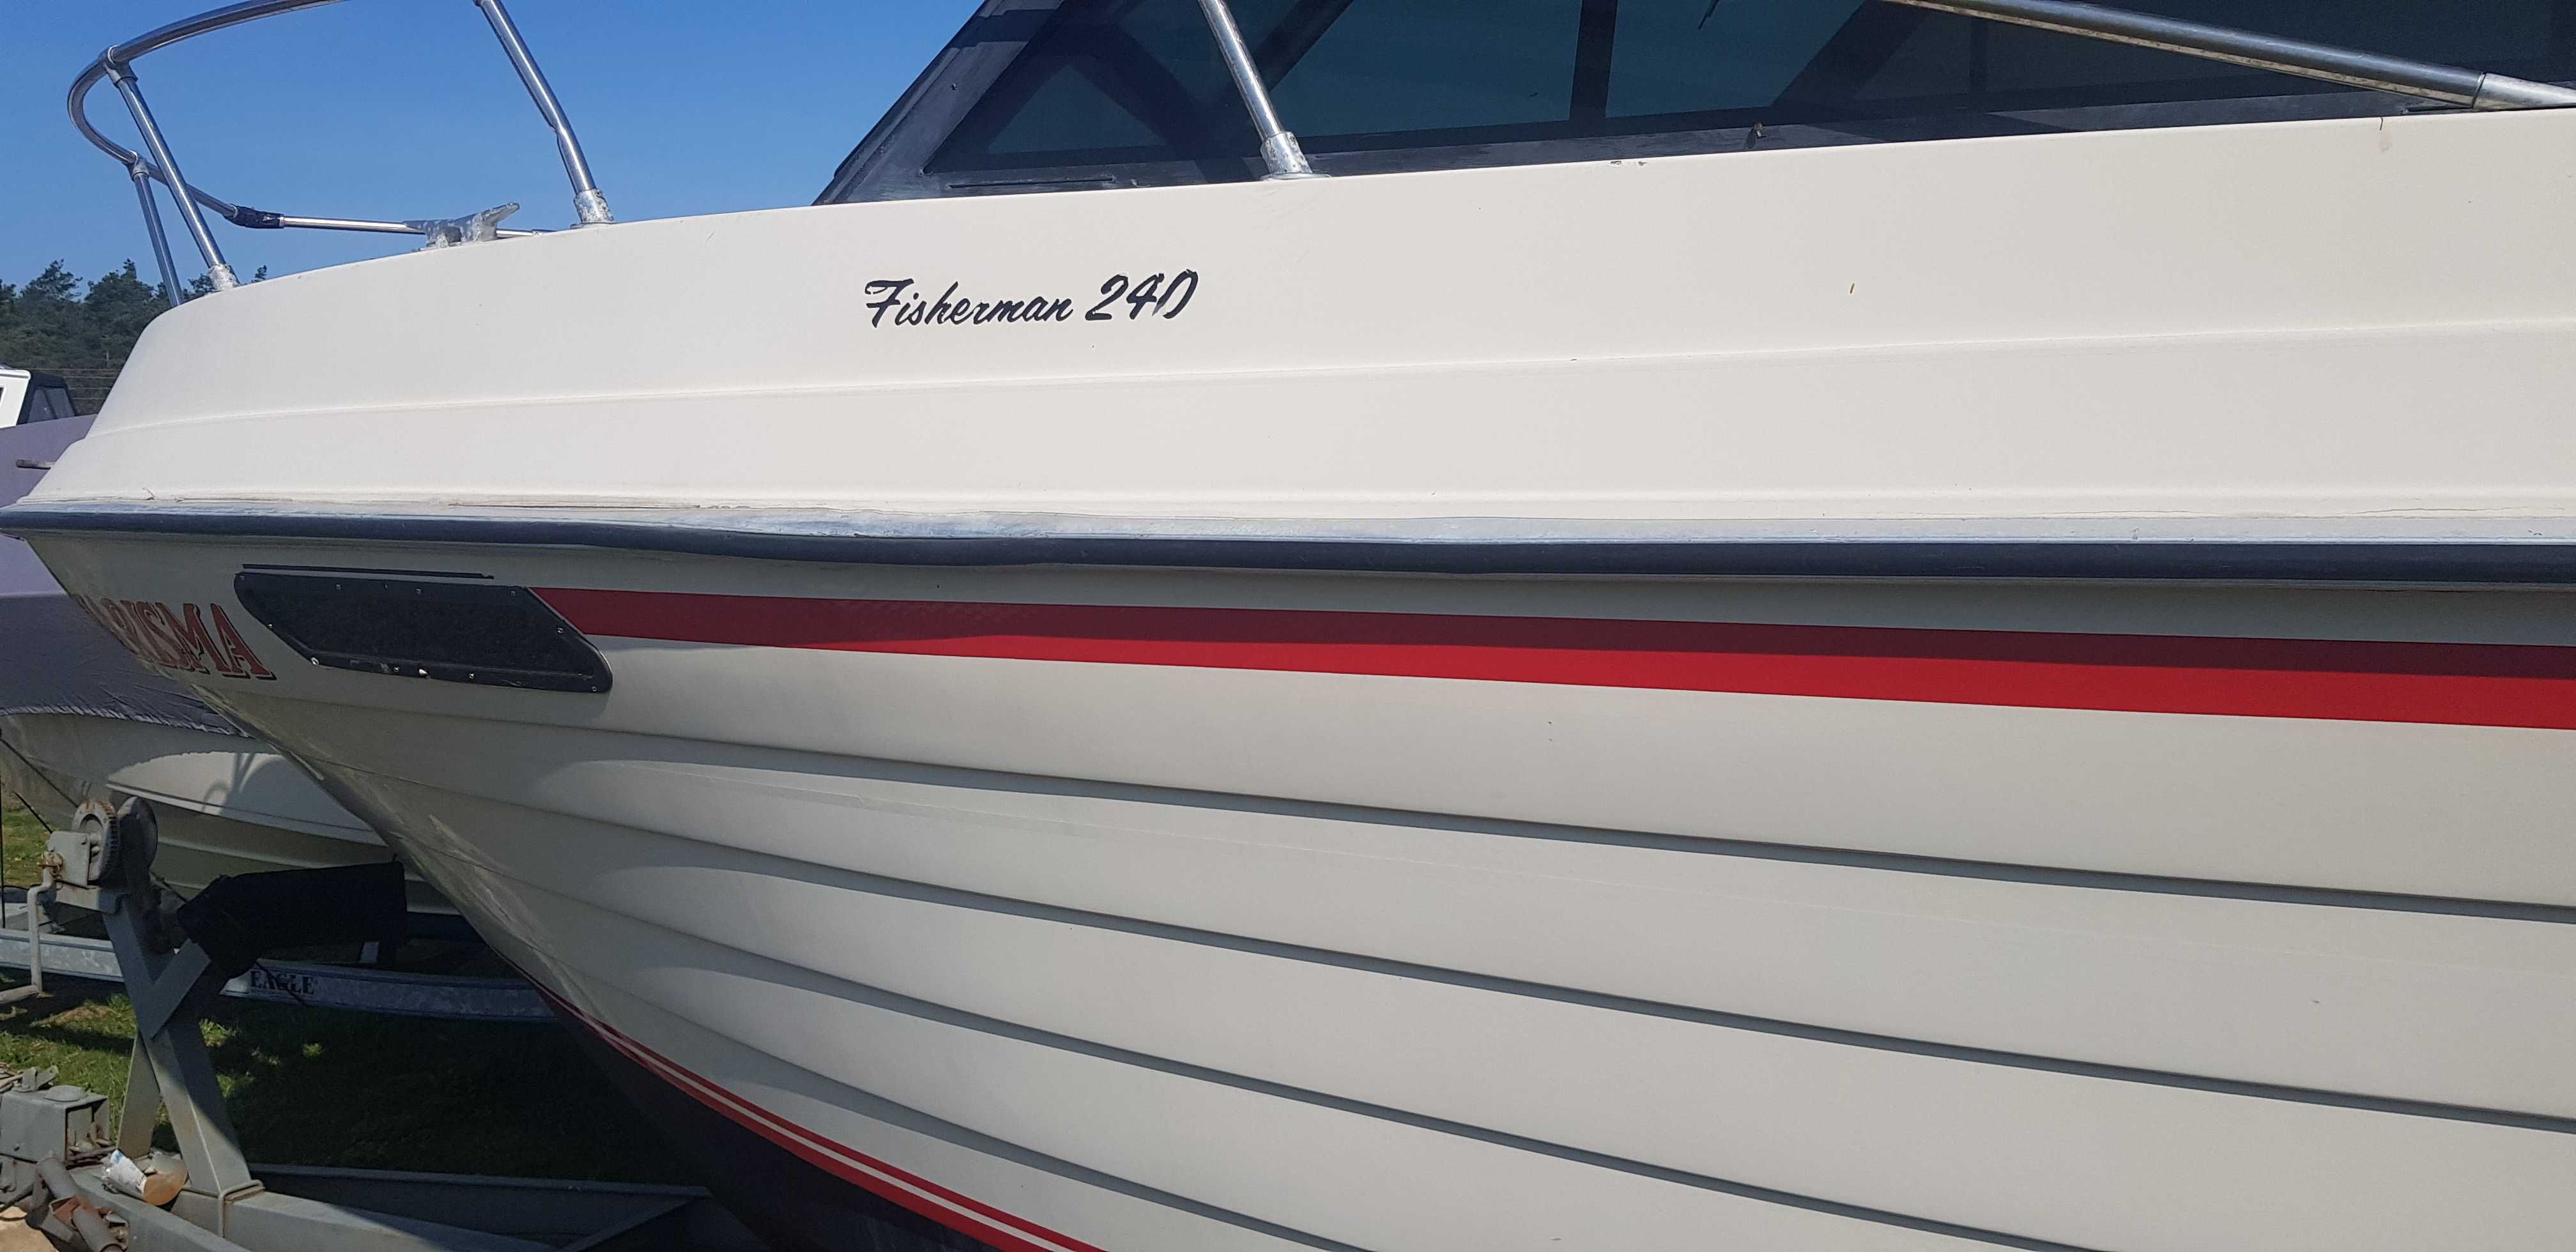 jacht motorowy Thompson 24 hardtop volvo penta 260 km bayliner sea ray